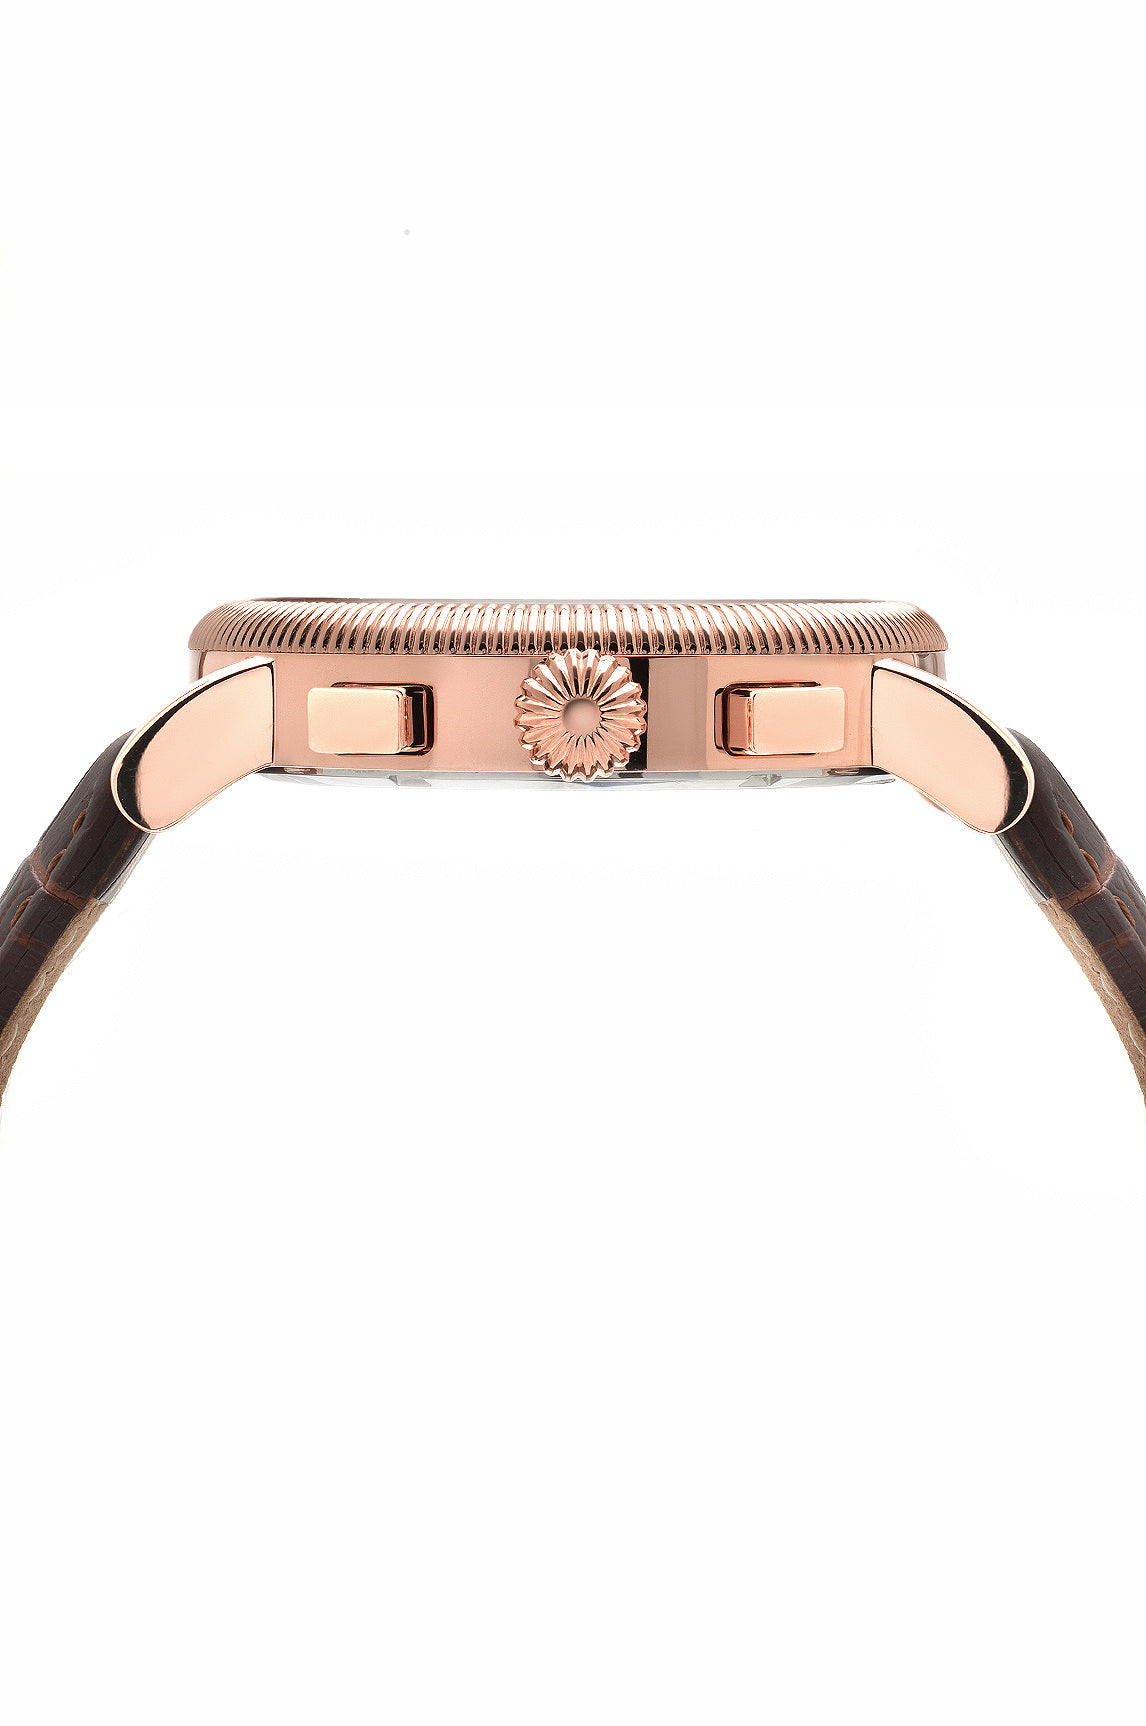 Porsamo Bleu Phileas luxury chronograph men's watch, genuine leather band rose, brown 471CPHL